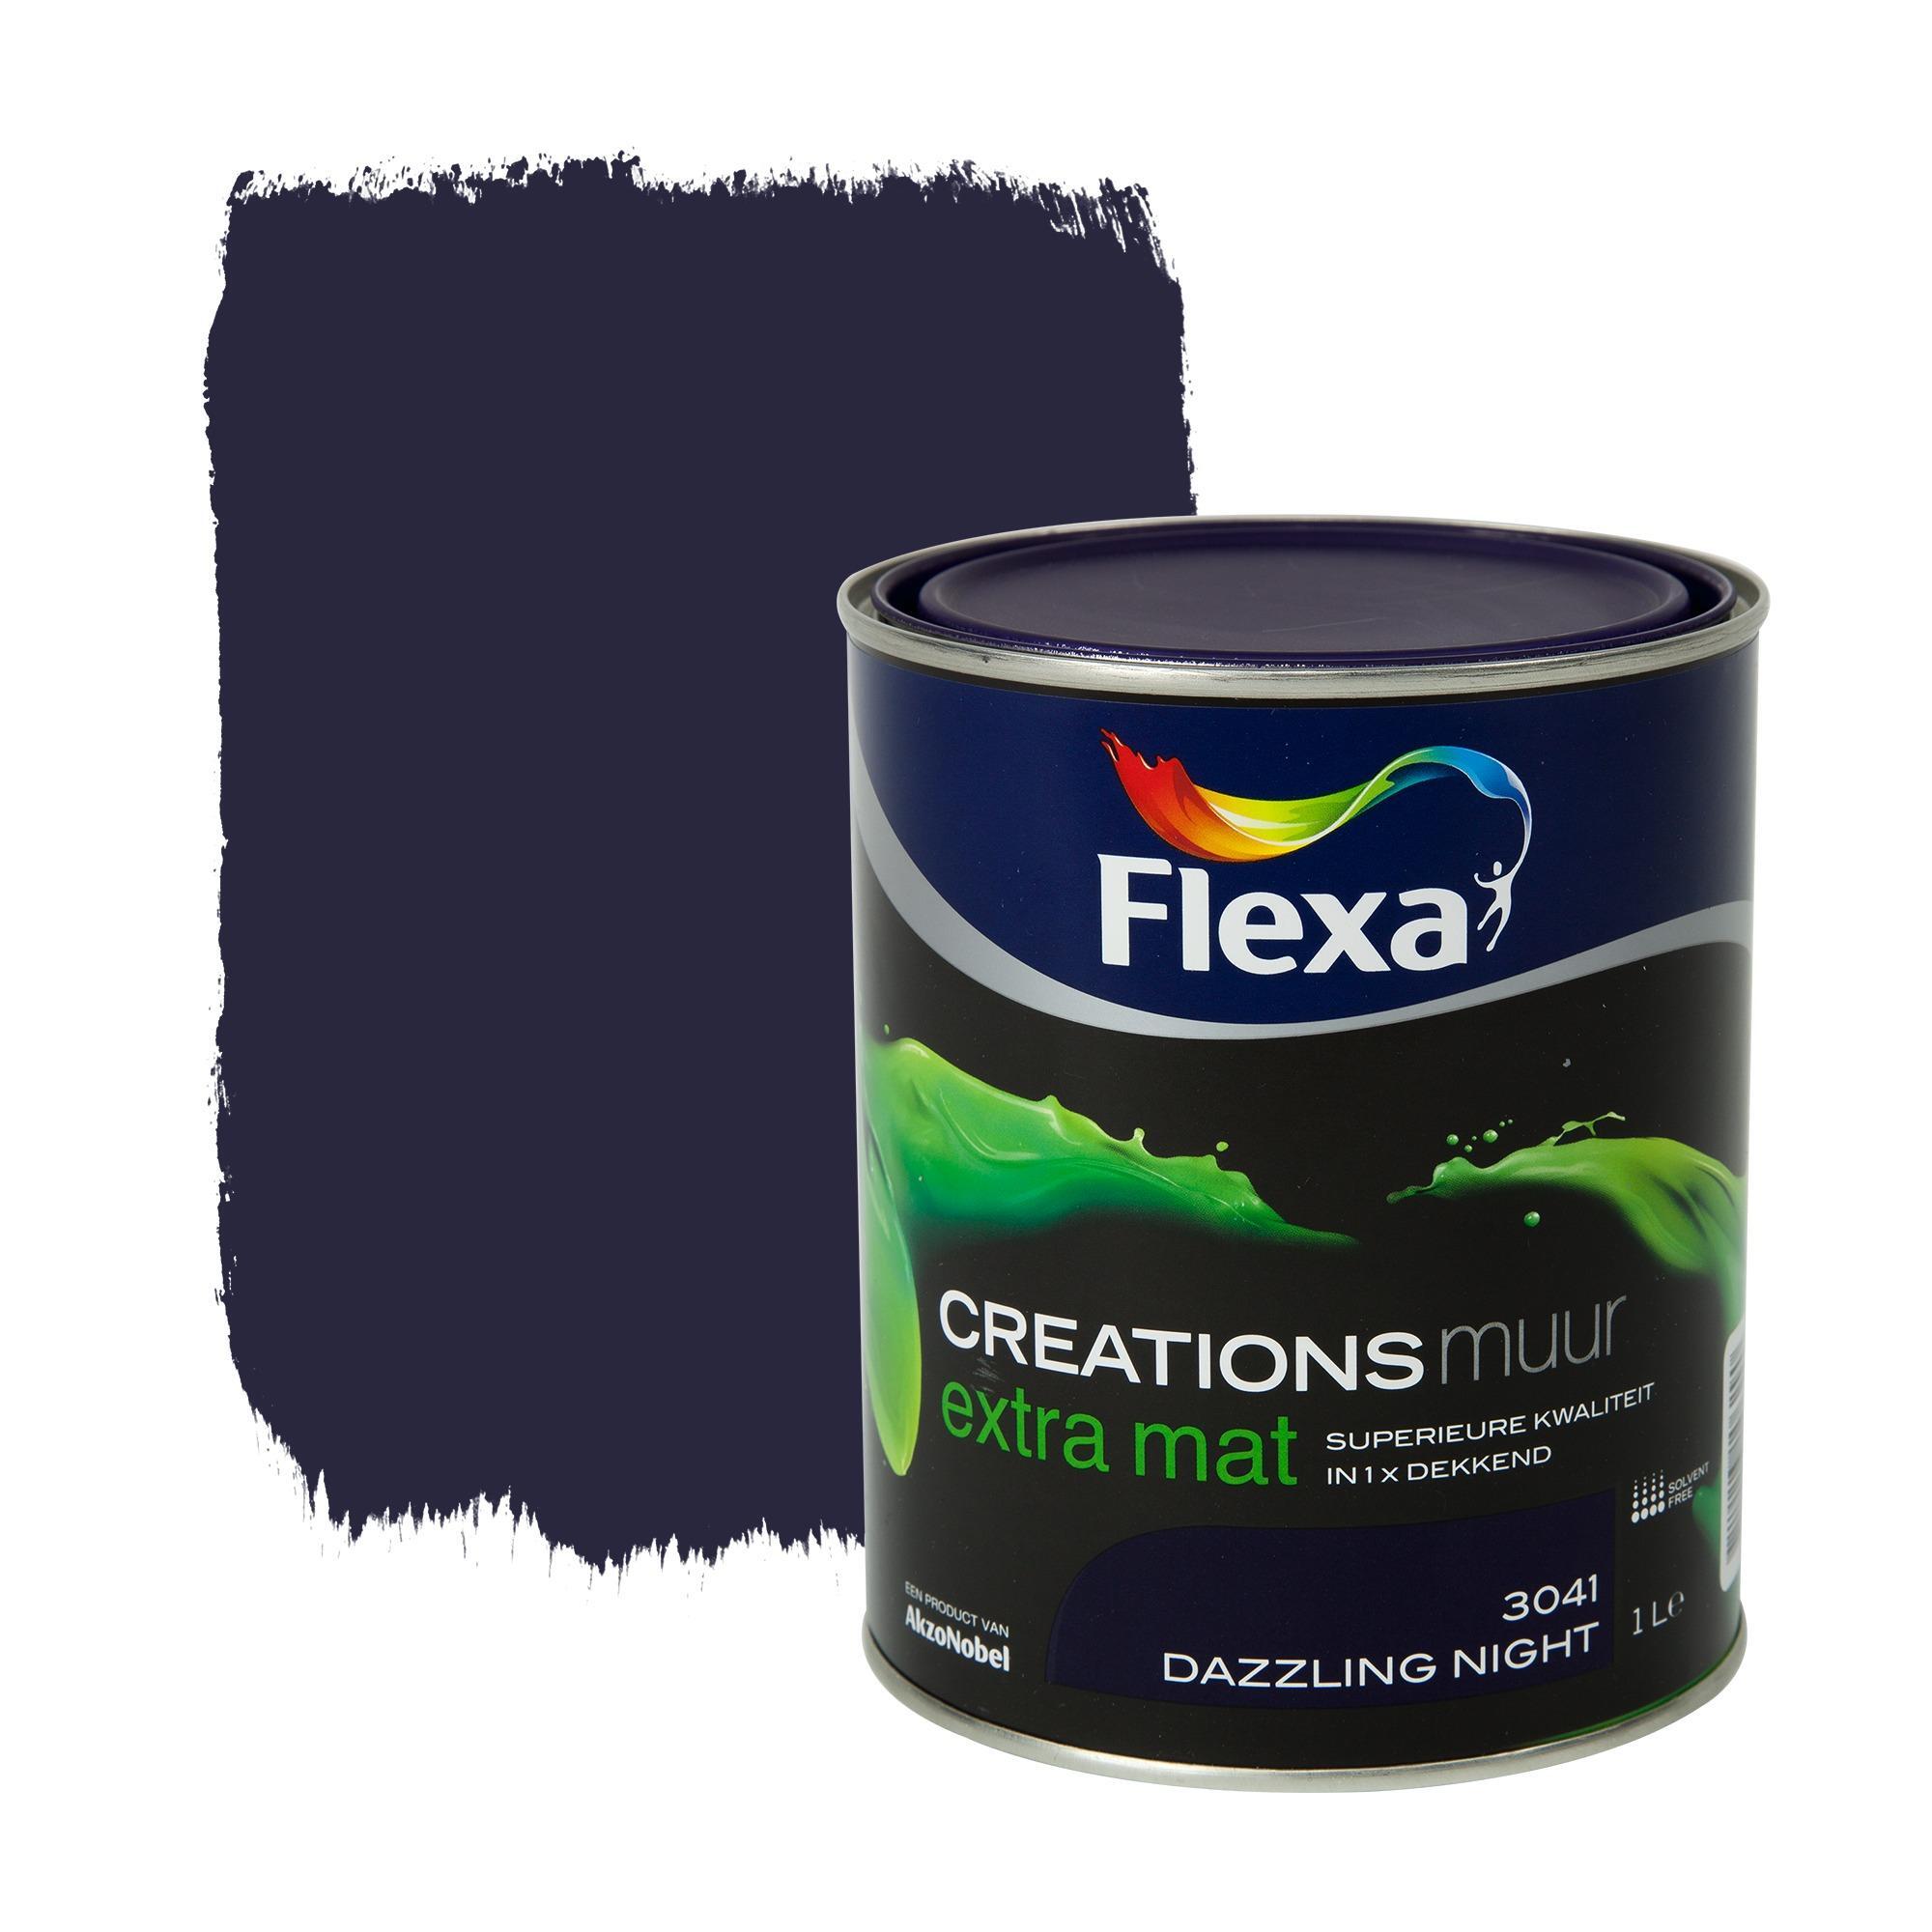 FLEXA Creations muurverf dazzling night extra mat 1 liter